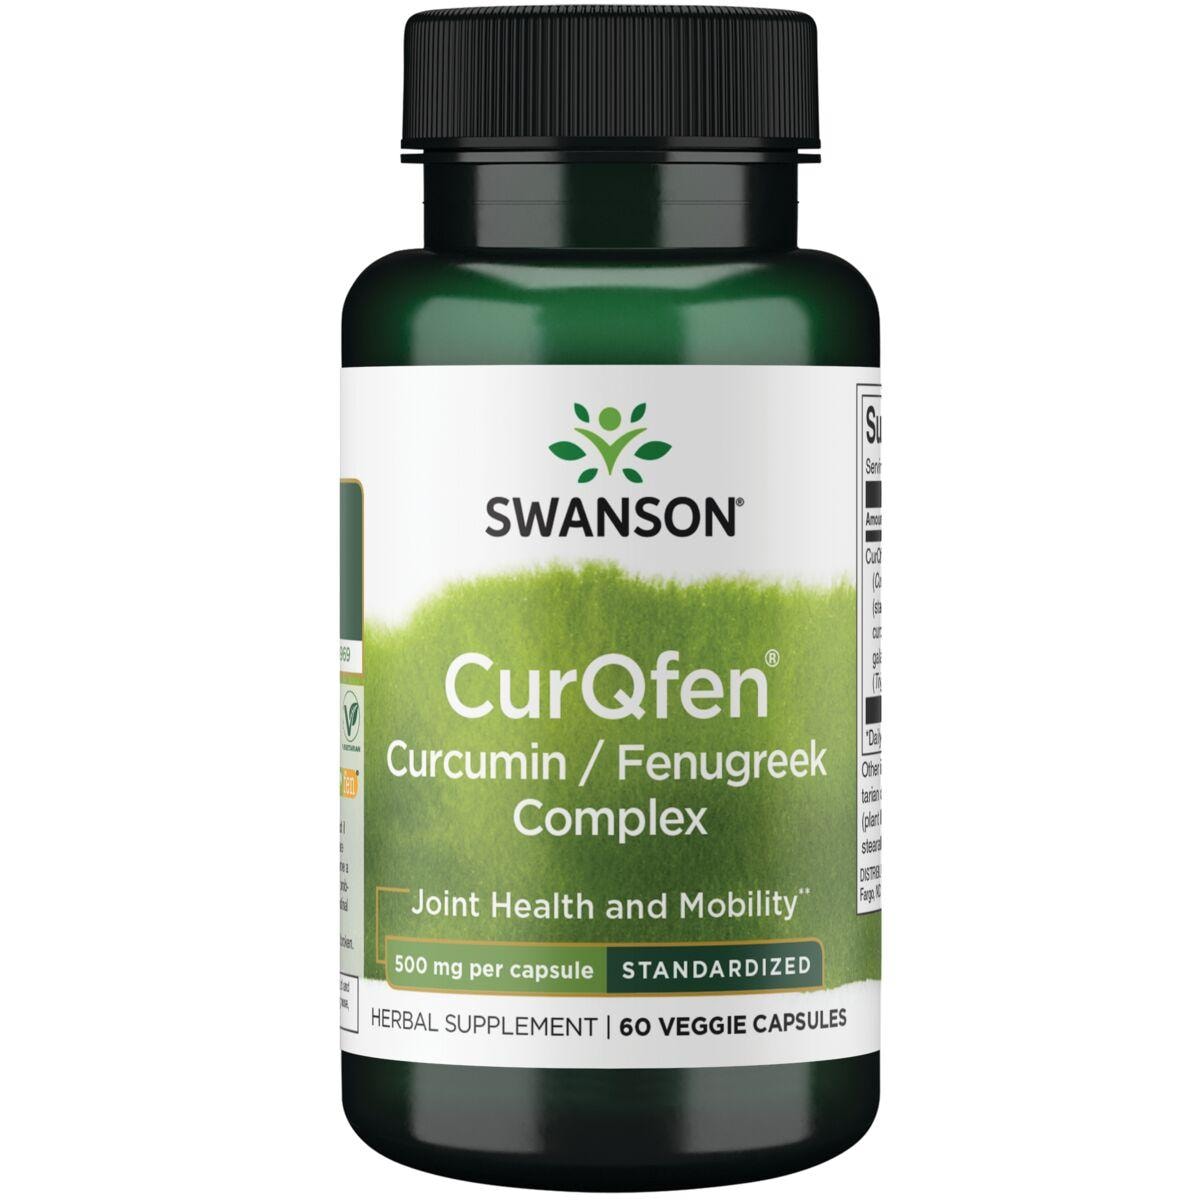 Swanson Superior Herbs Curqfen Curcumin/Fenugreek Complex - Standardized Vitamin | 500 mg | 60 Veg Caps